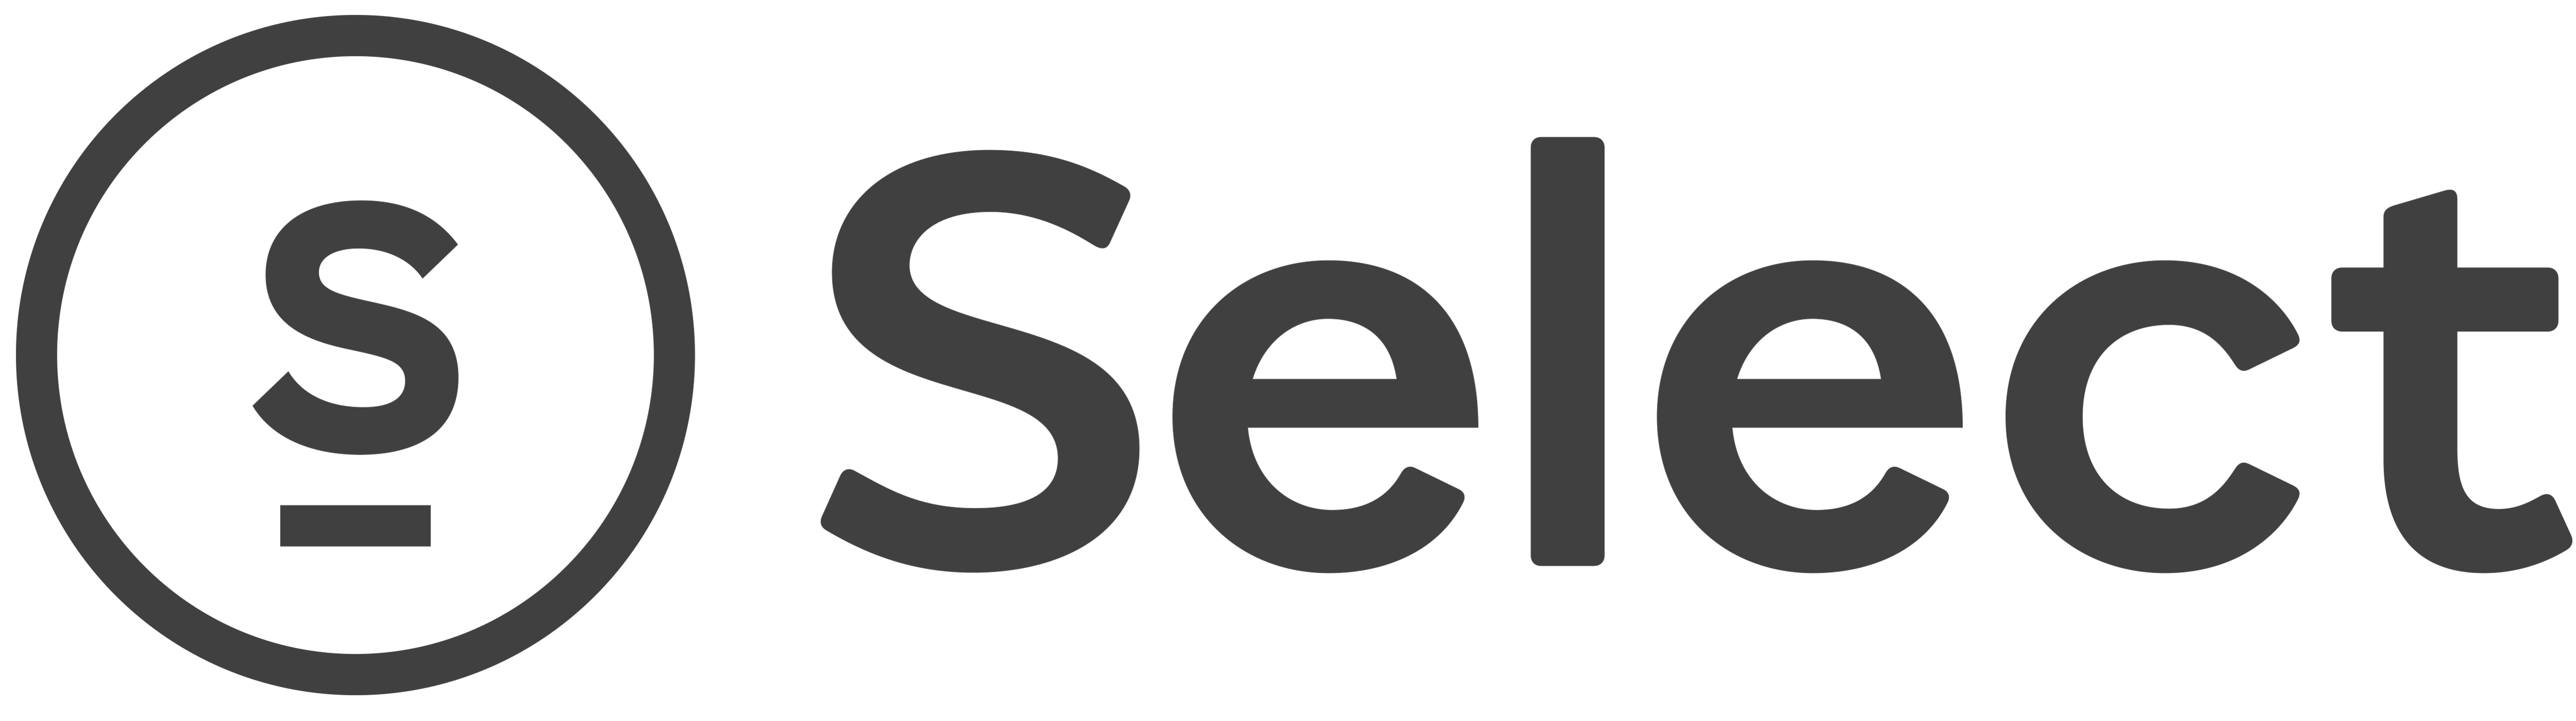 Сайт select. Бренд select. Select эмблема. ООО Селект. Selecte; логотип.